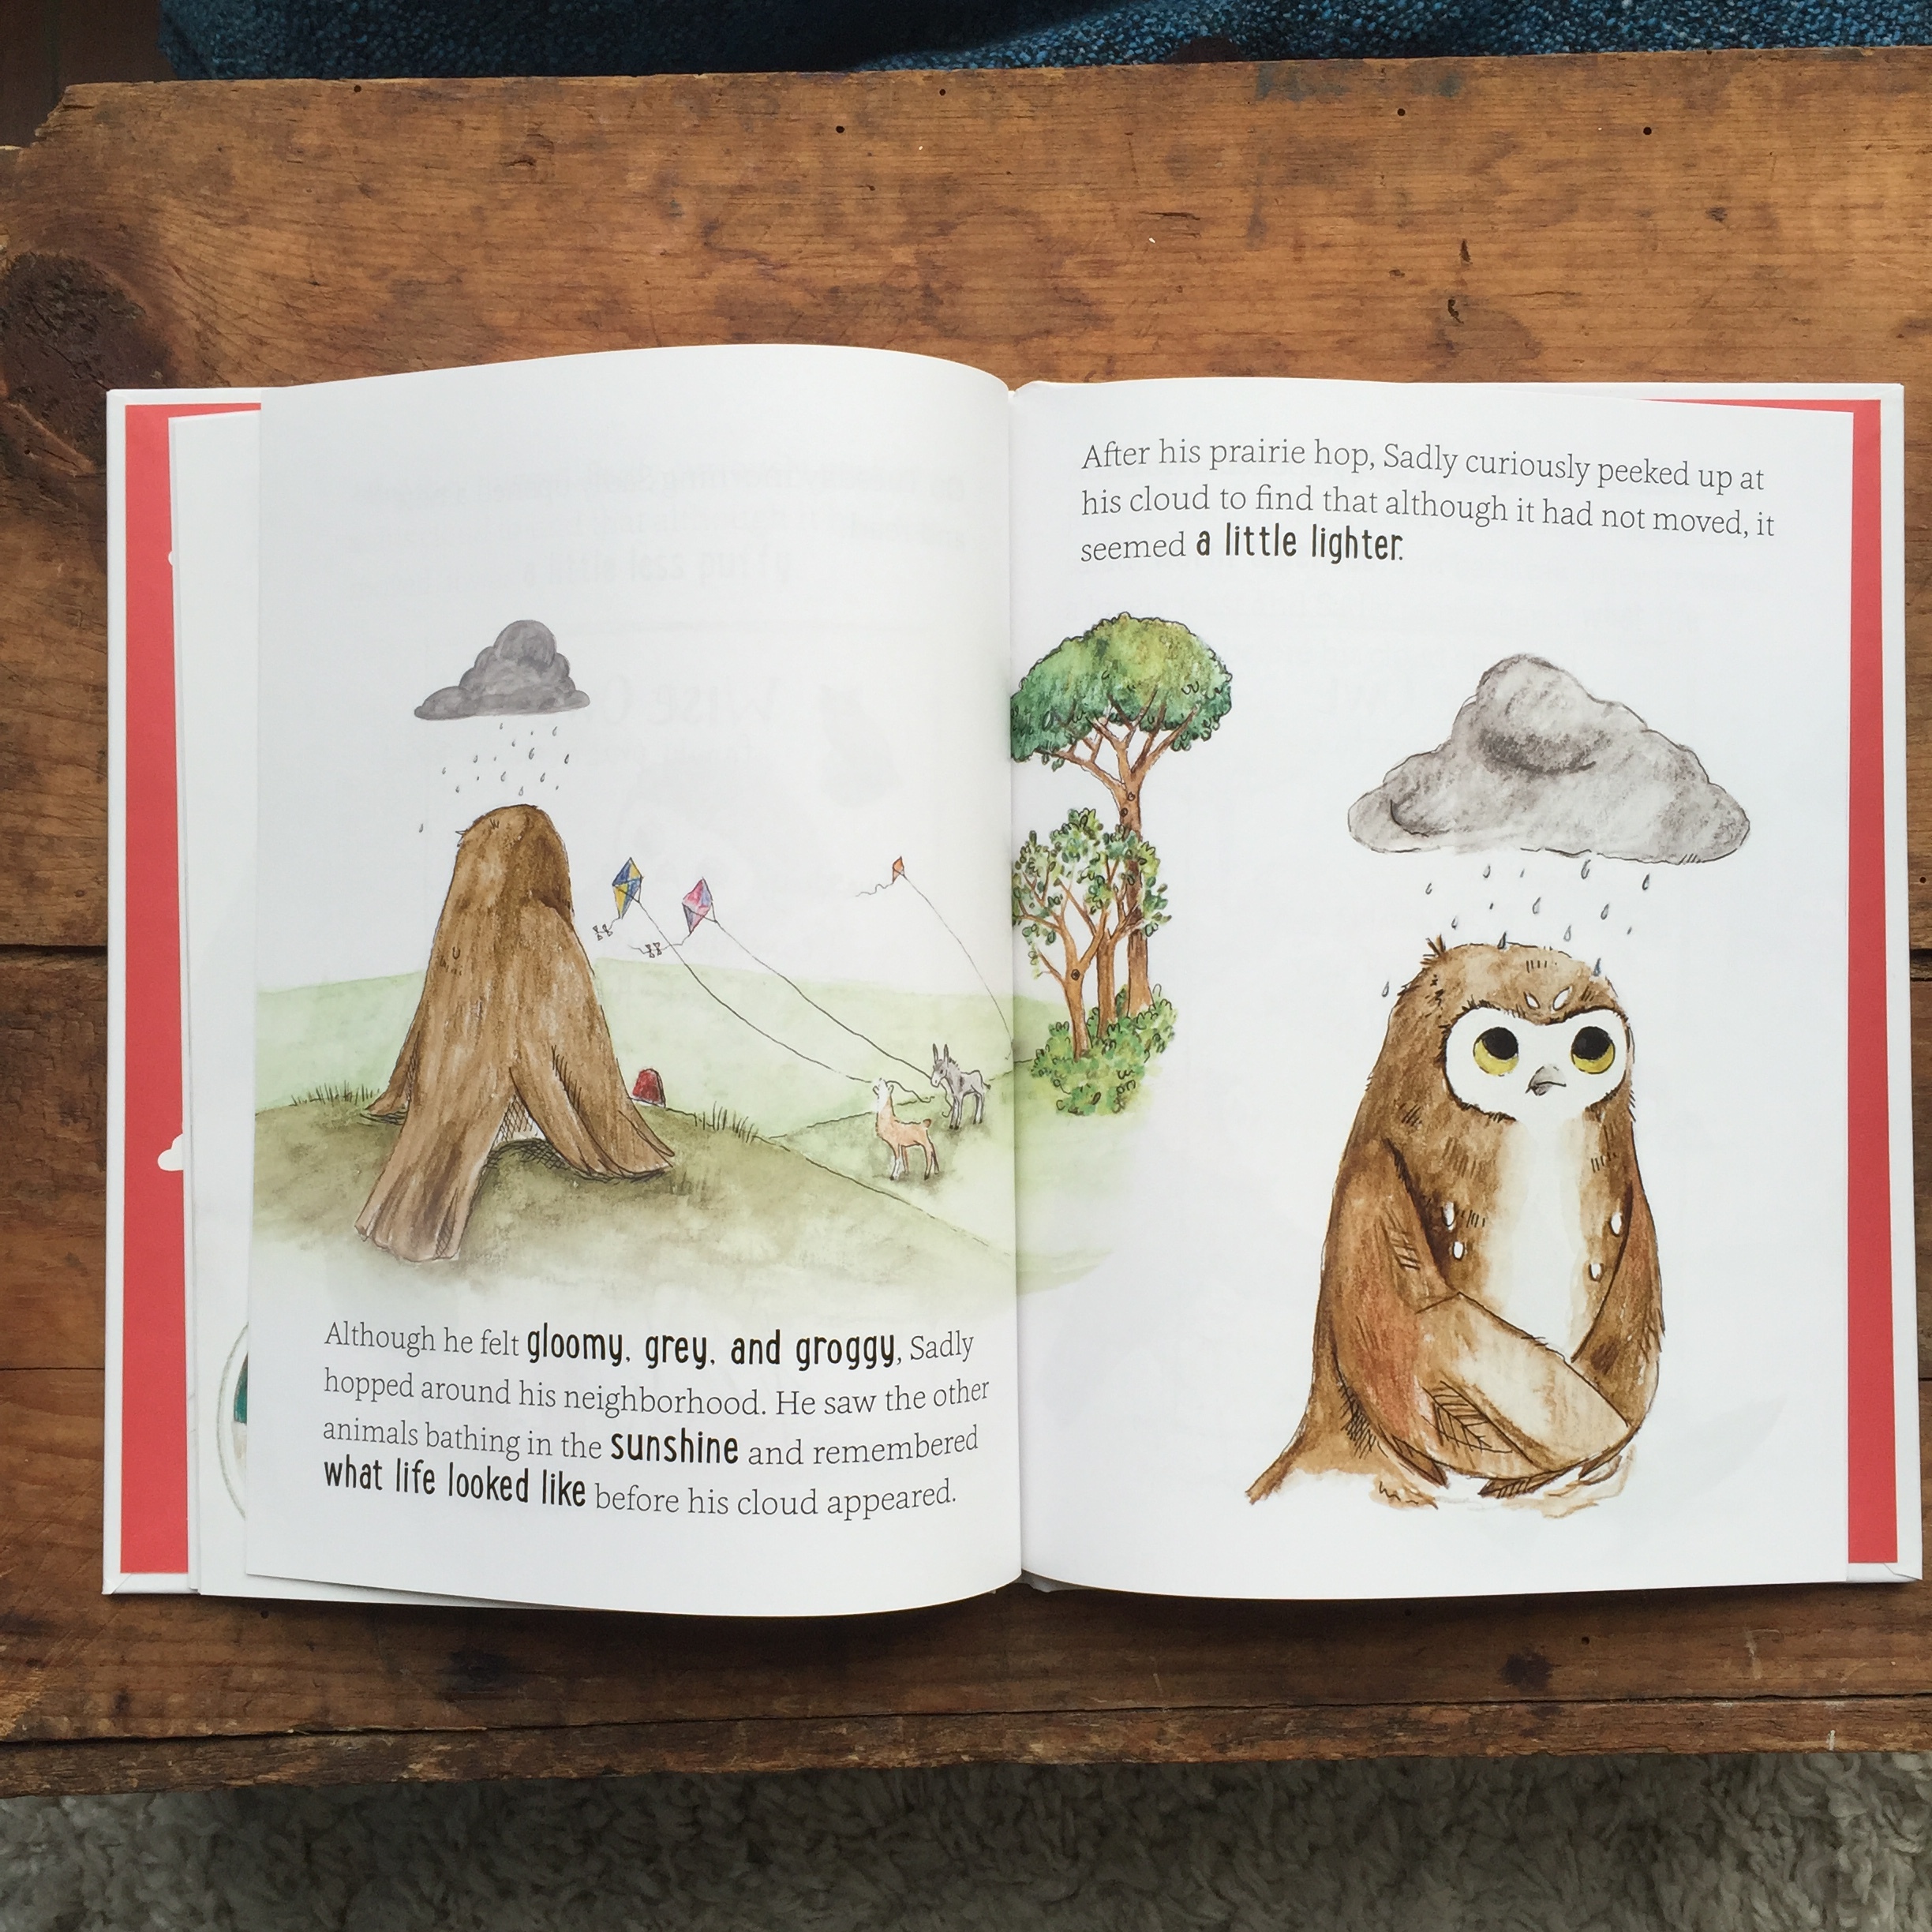  Sadly the Owl, written by Linnie Von Sky.&nbsp;Illustration and book design by Ashley O'Mara. &nbsp; 